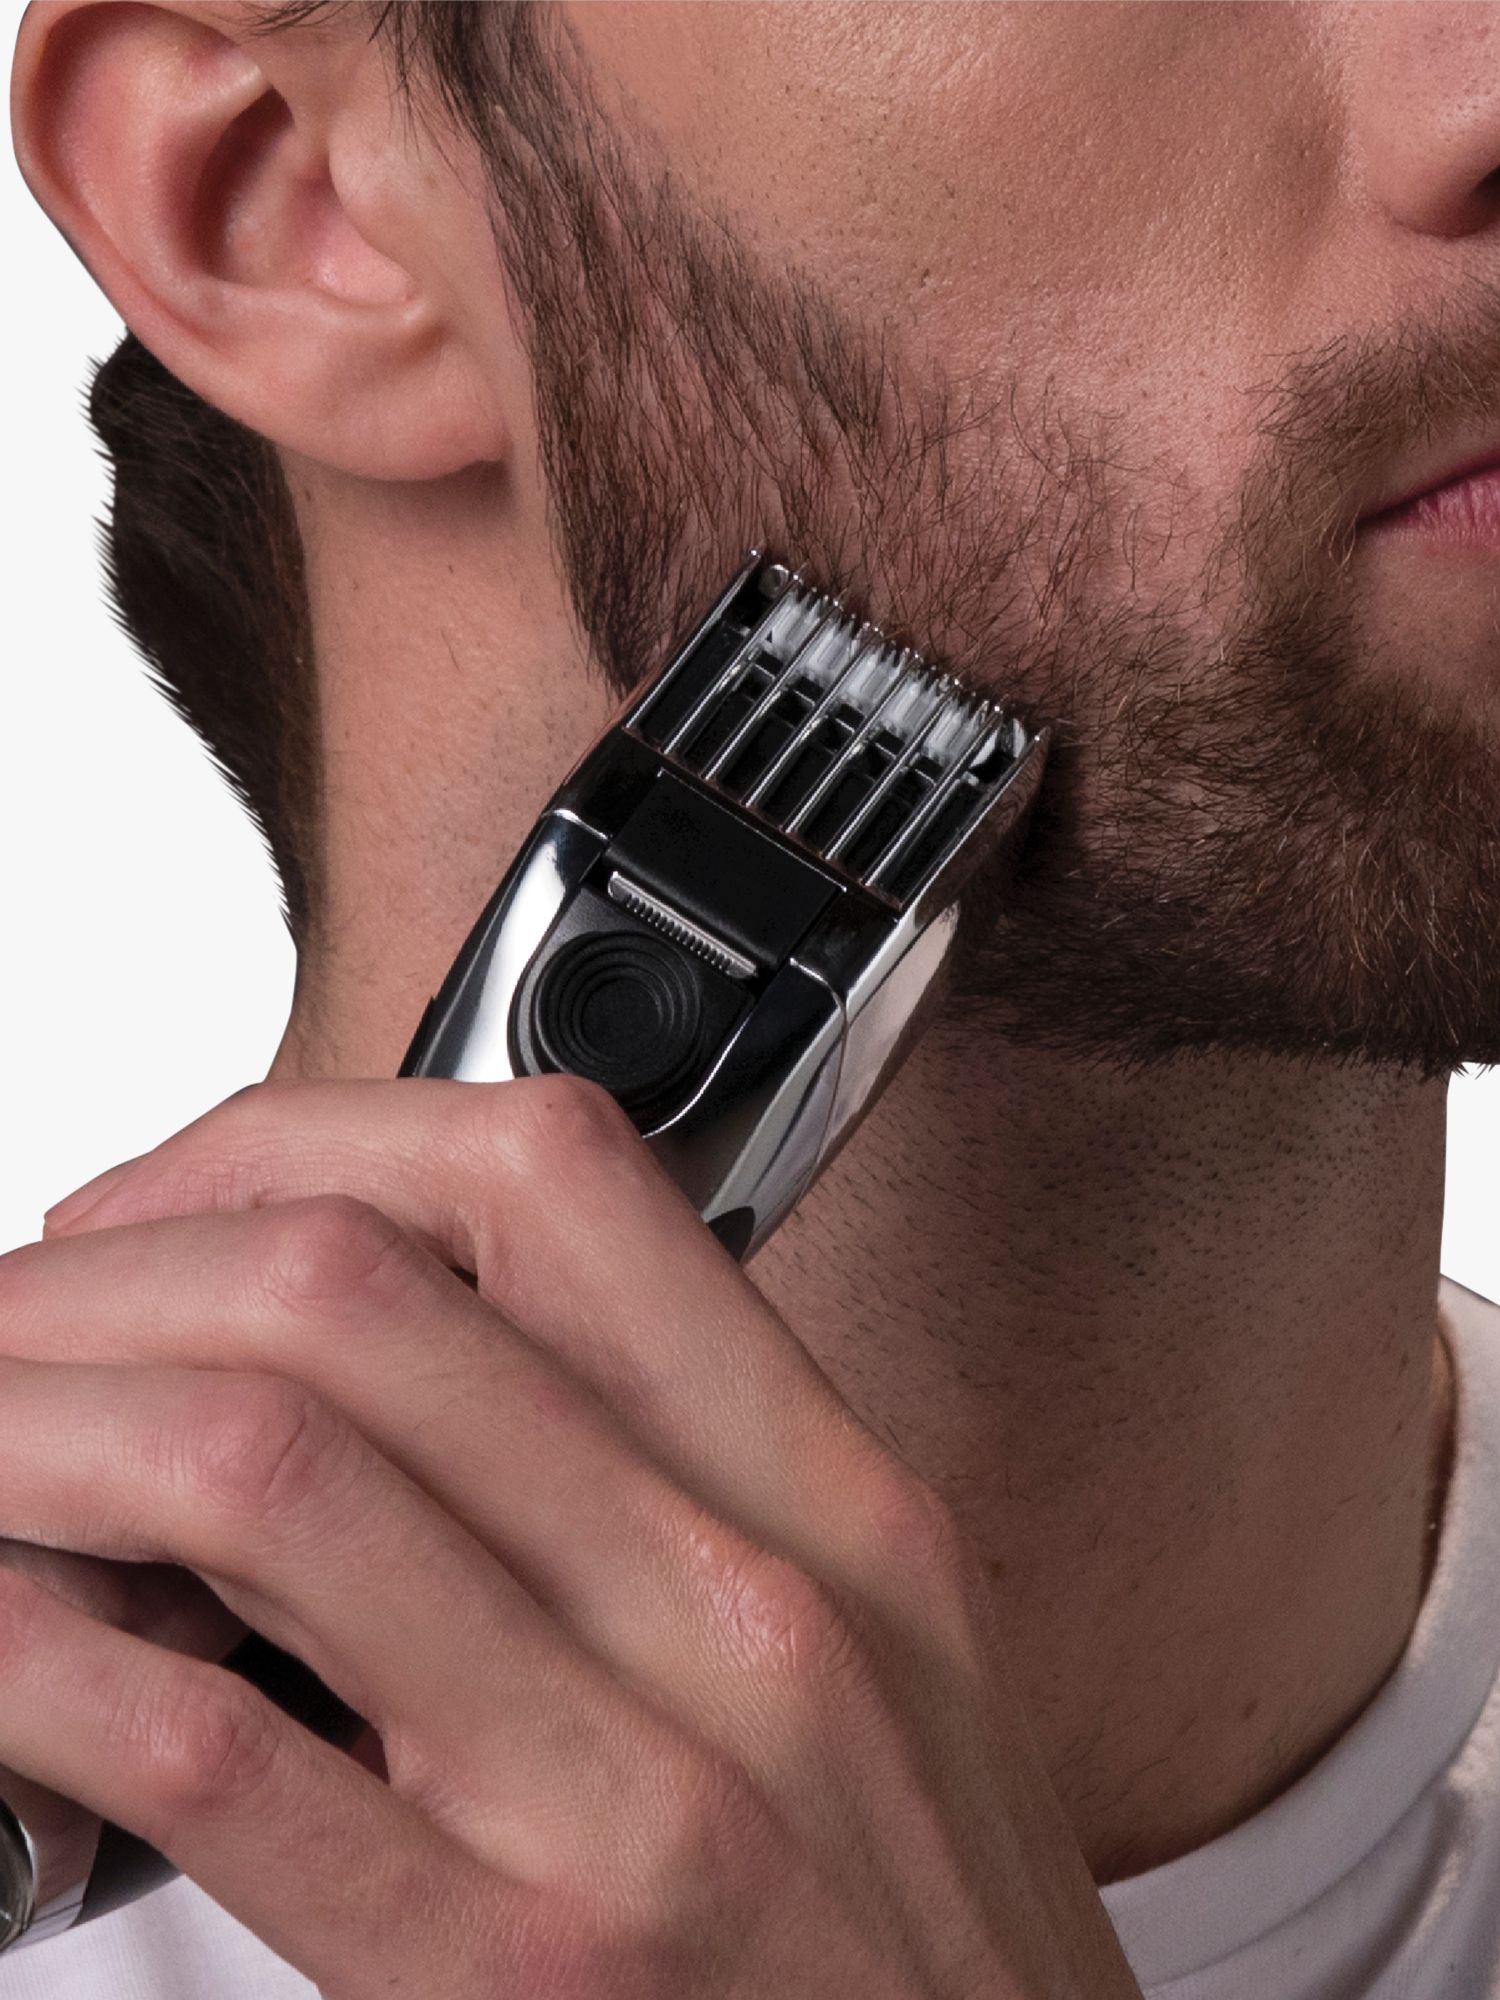 remington 320c beard trimmer